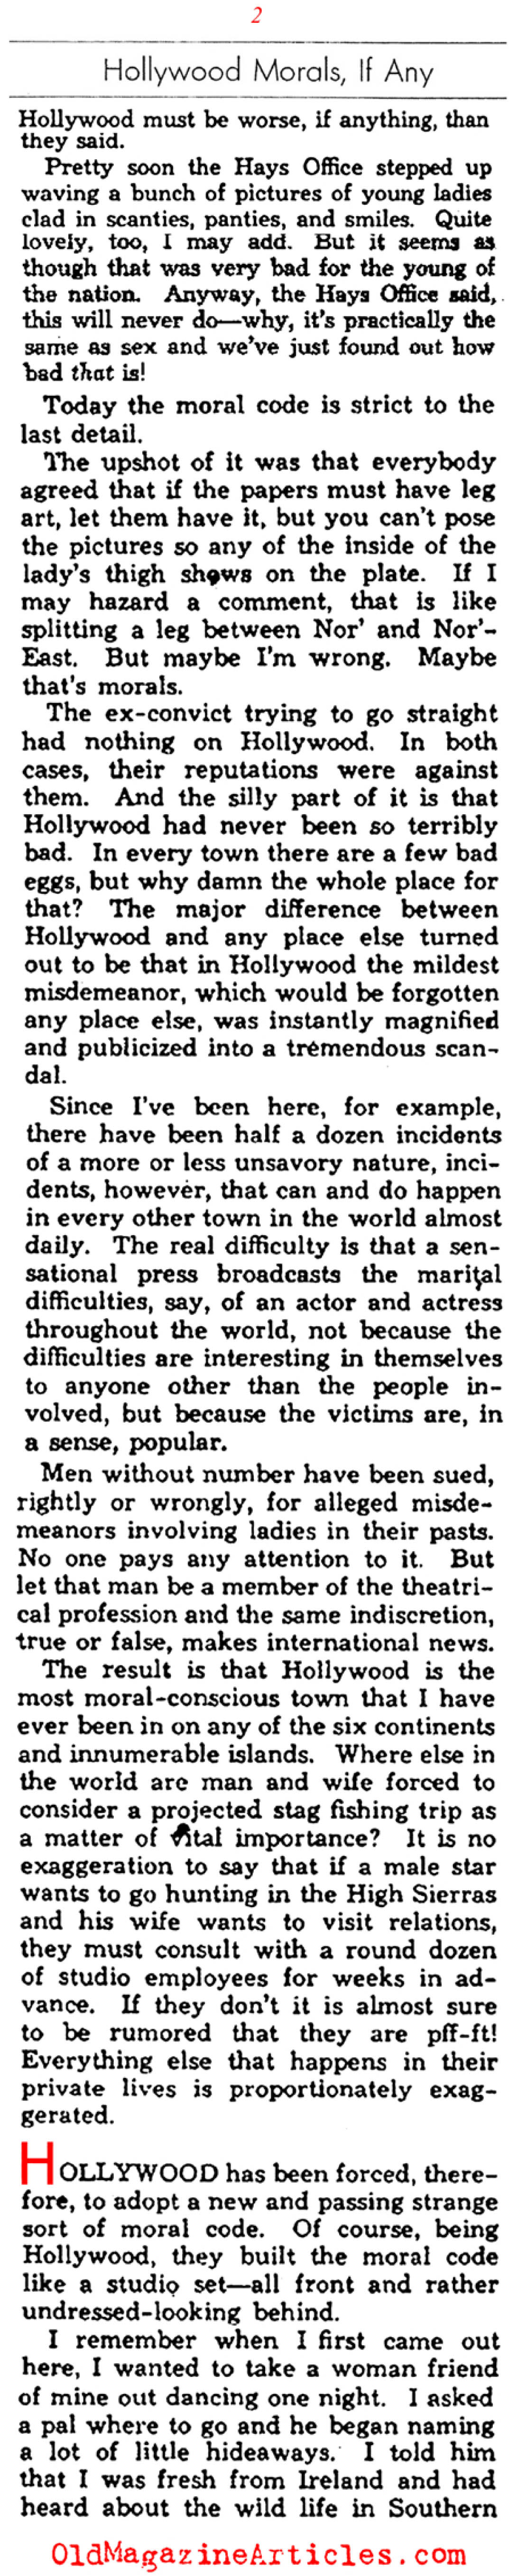 Errol Flynn: Defender of Hollywood Morality (Photoplay Magazine, 1937)